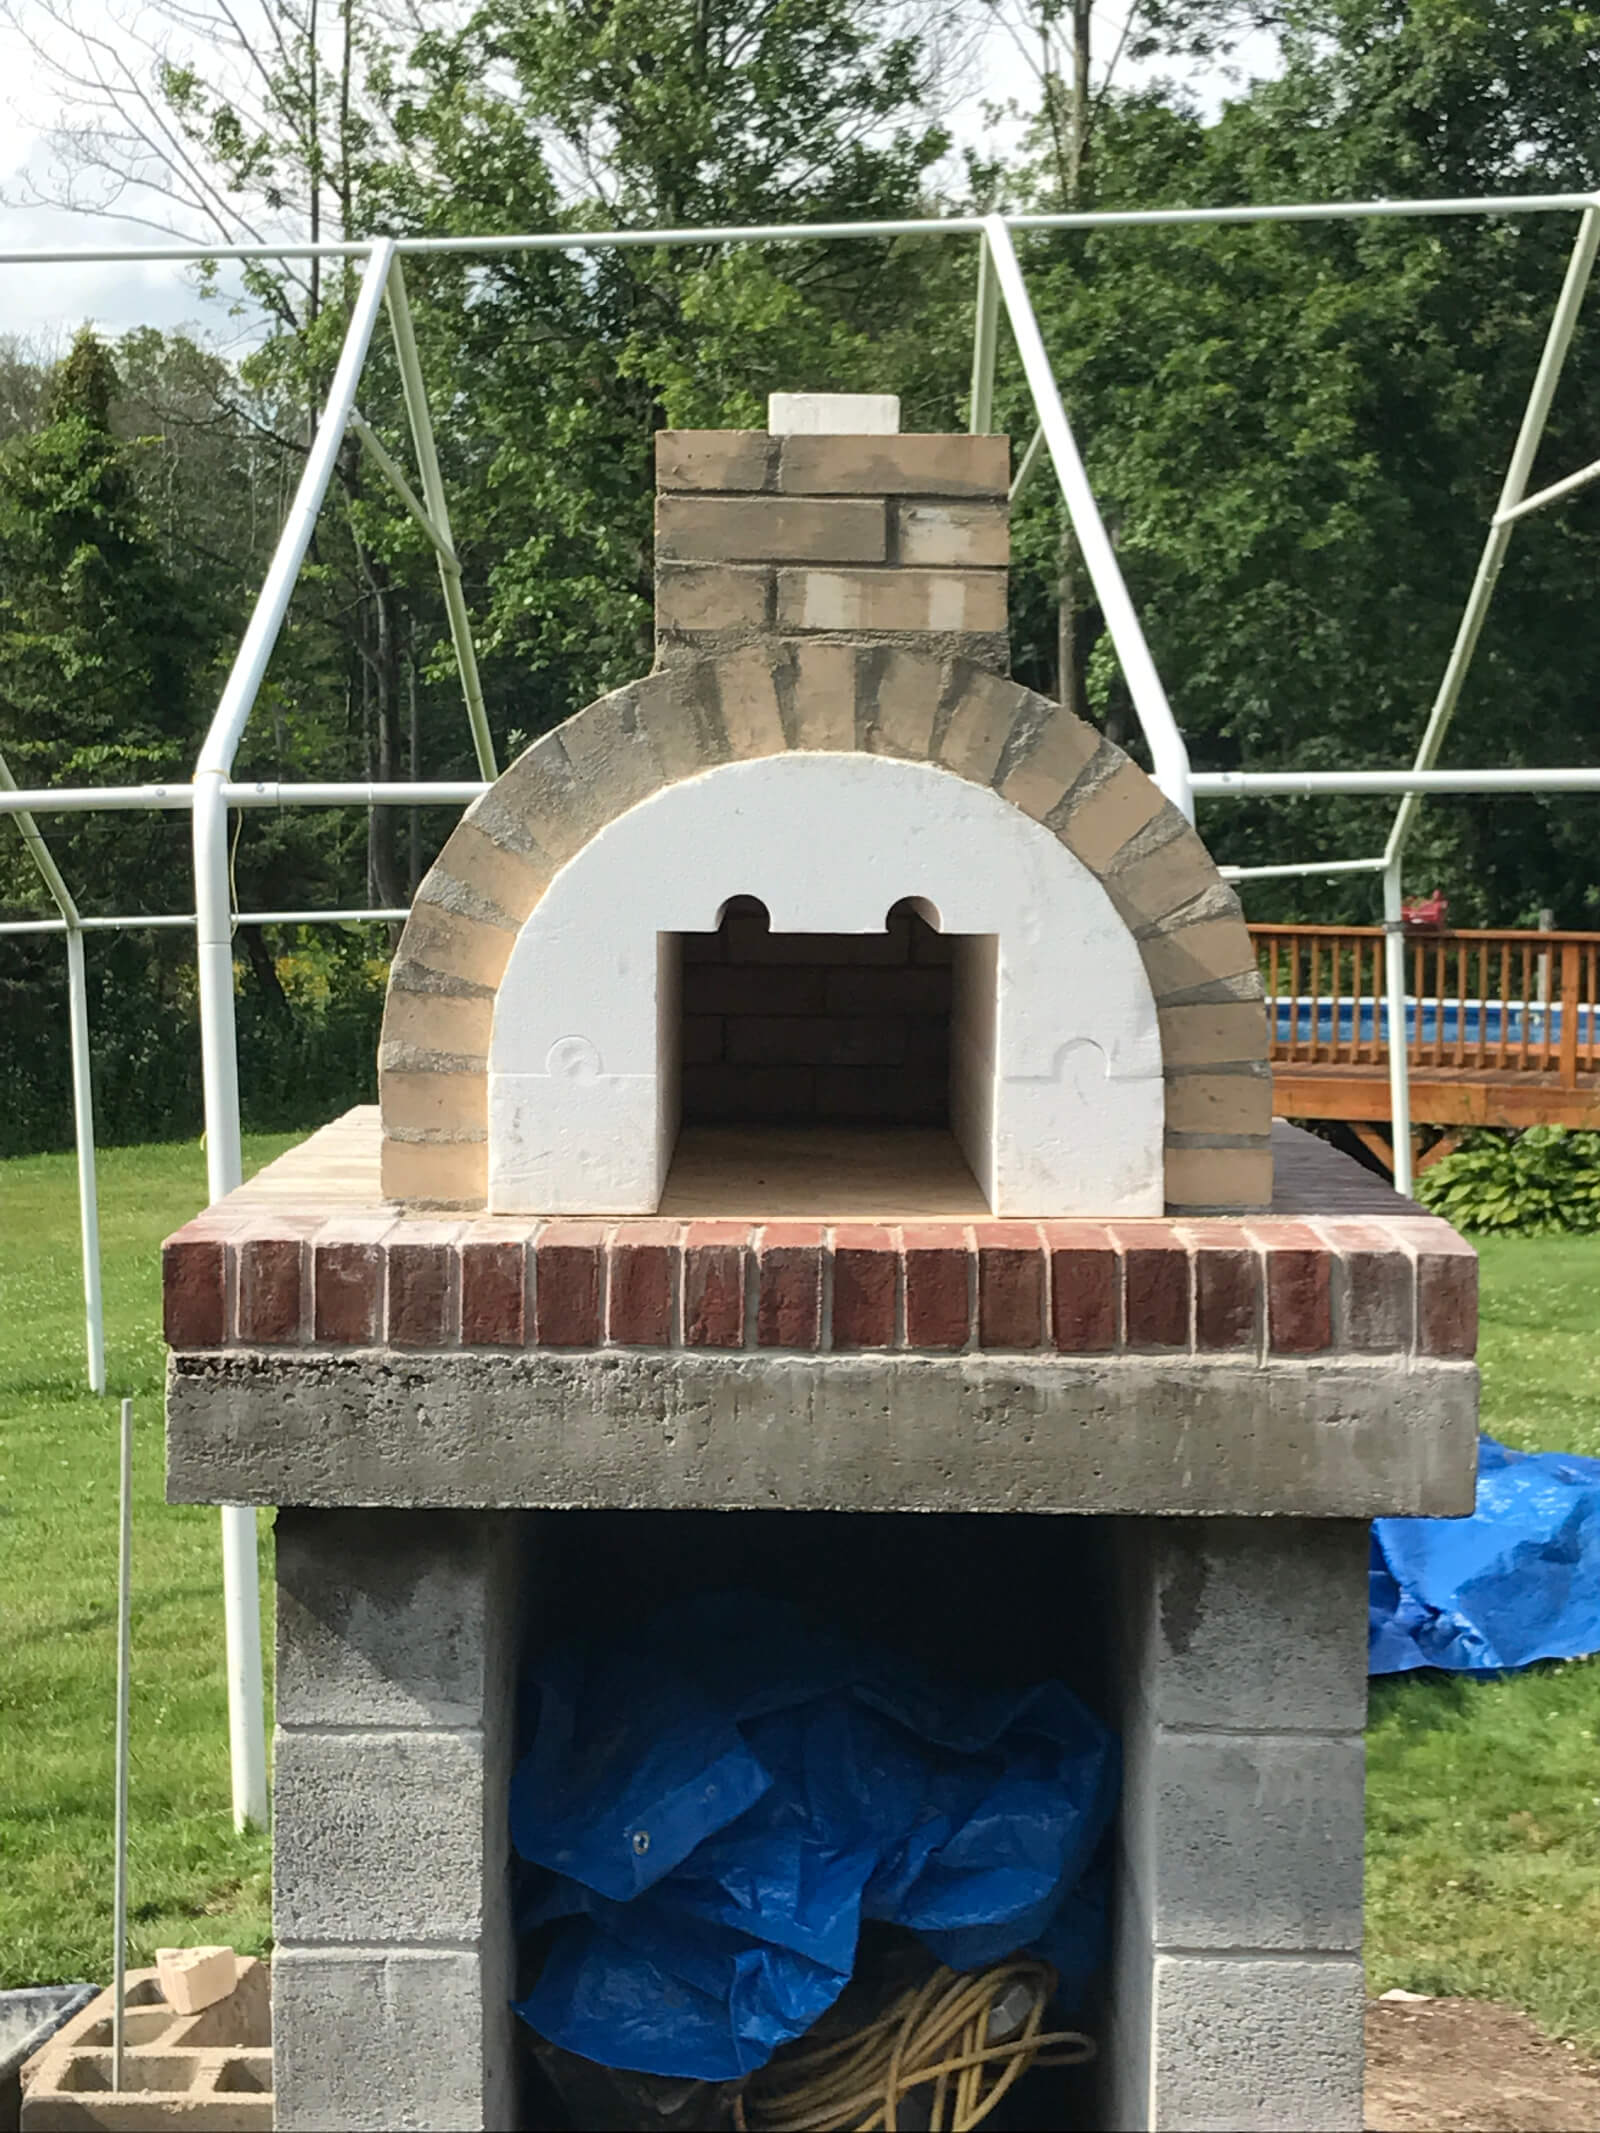 Backyard-Pizza-Brick-Oven-5